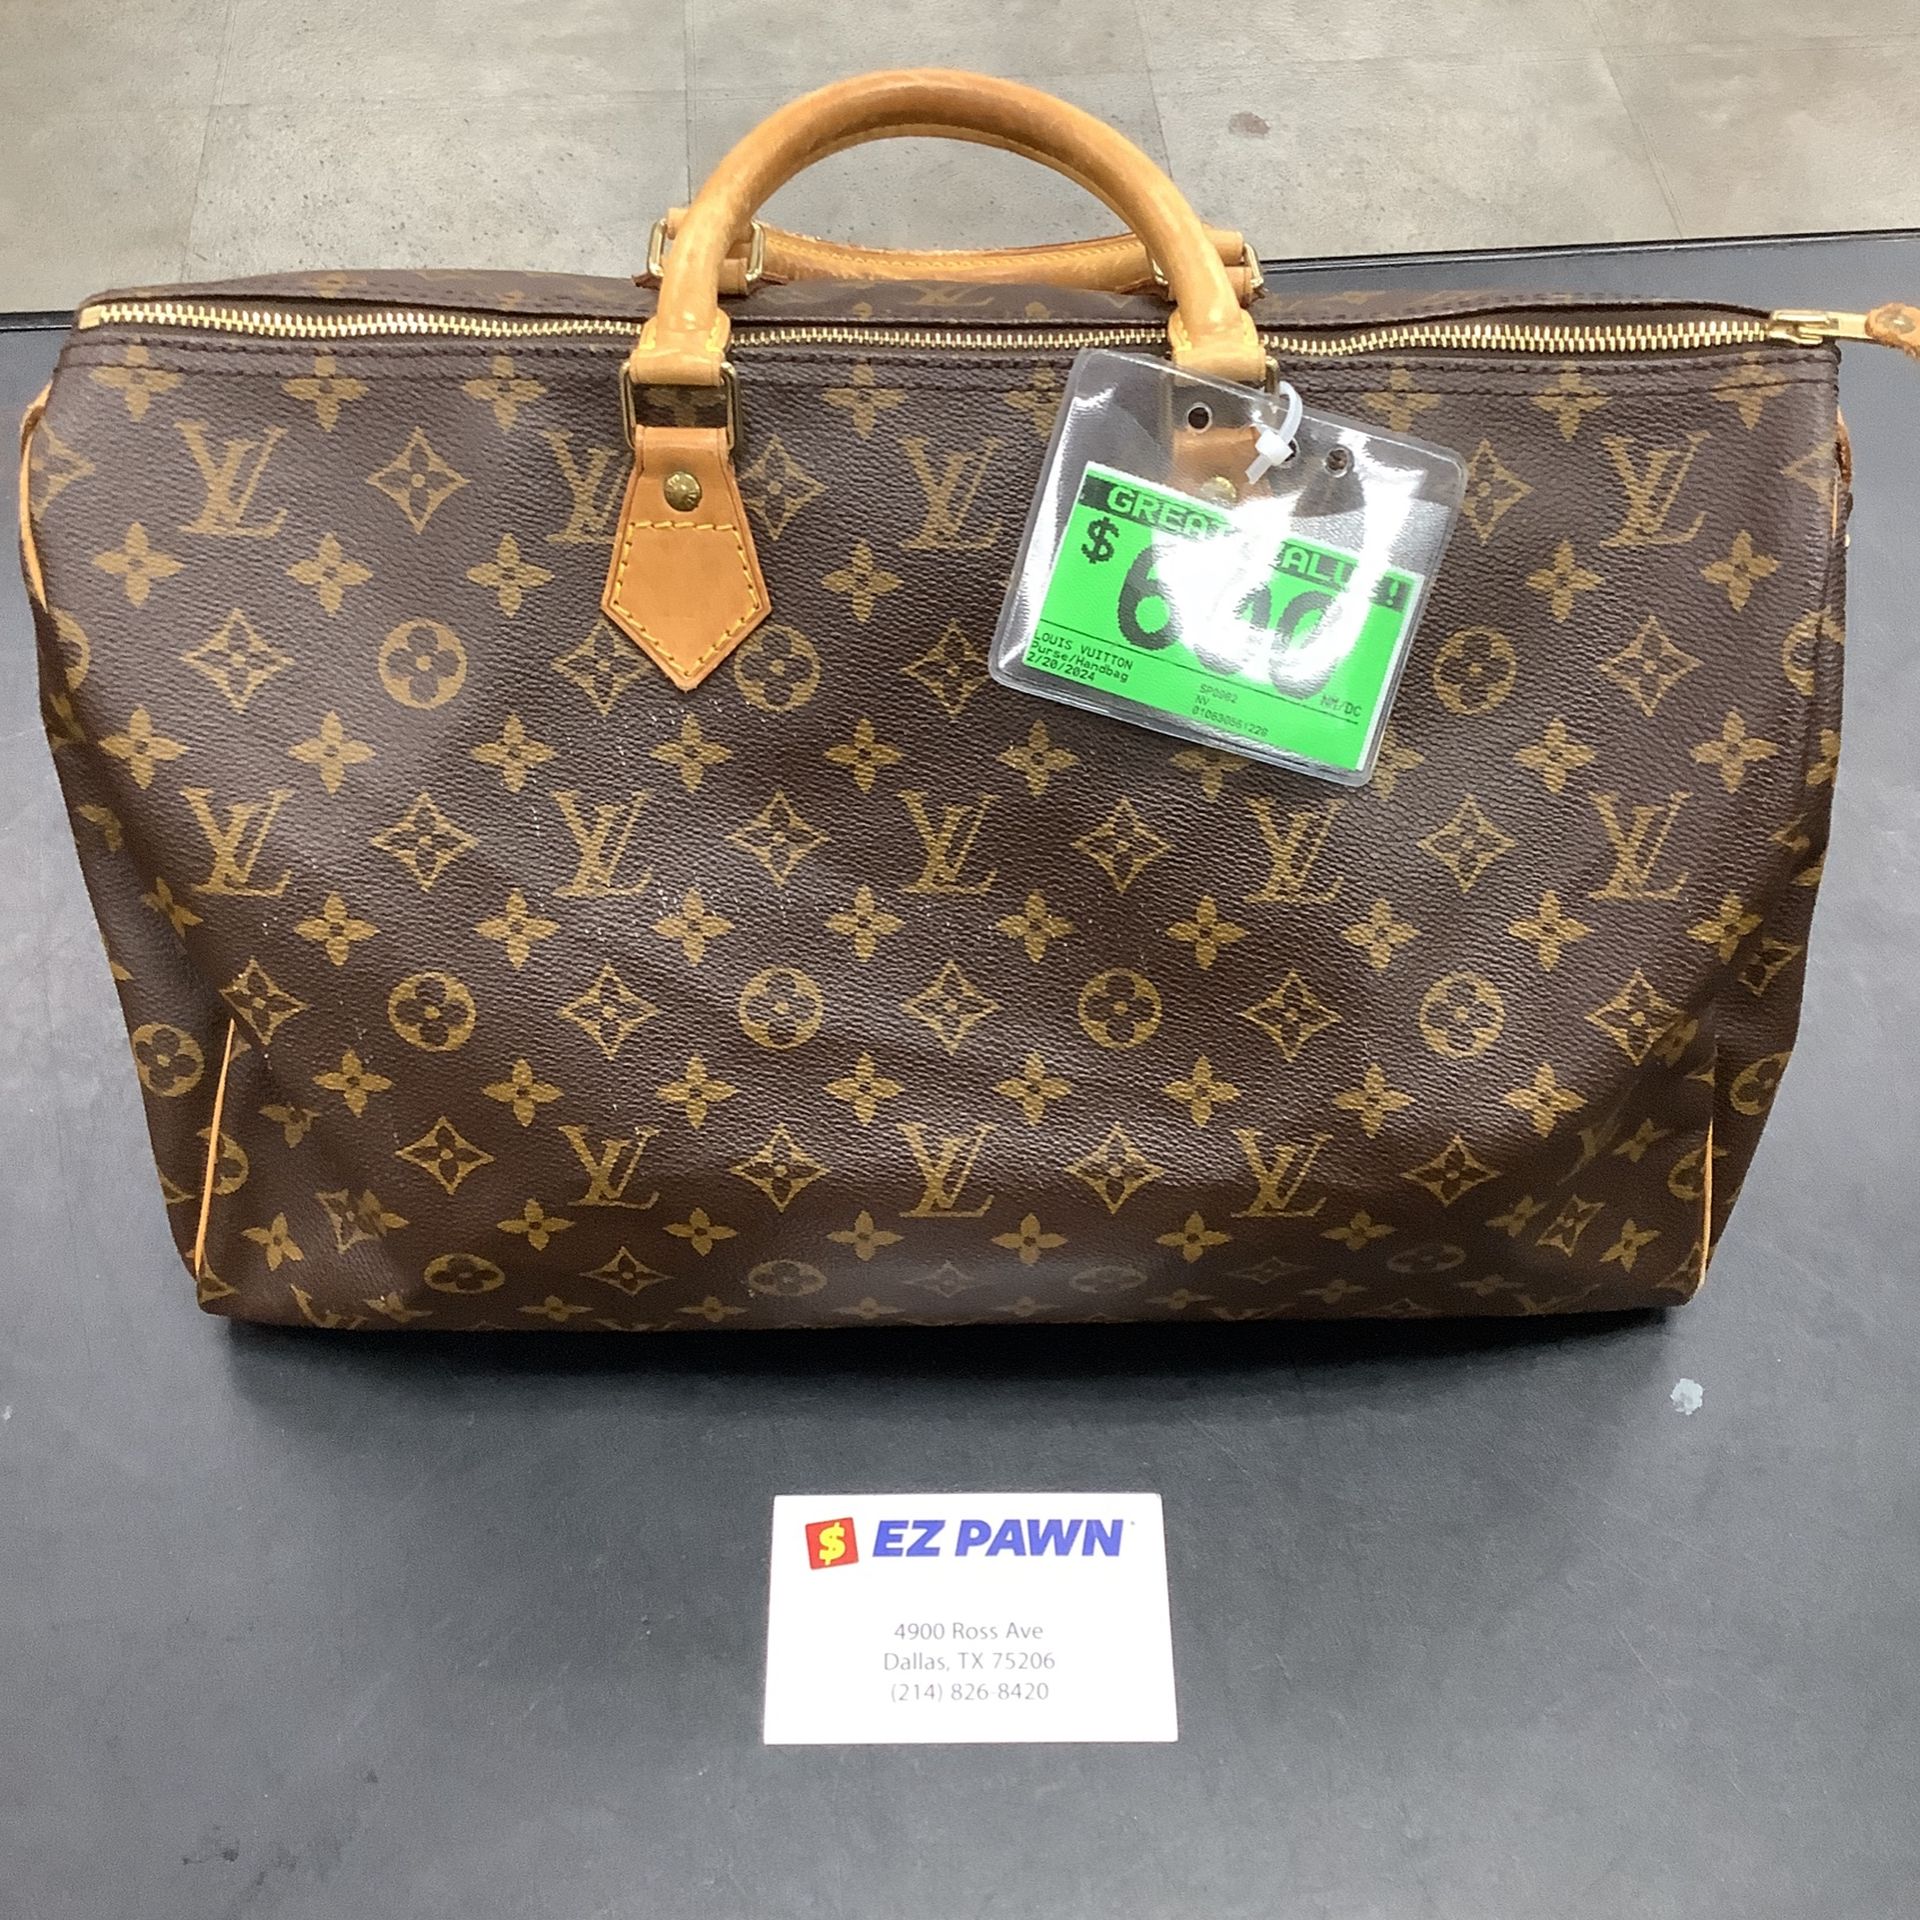 Louis Vuitton duffel bag